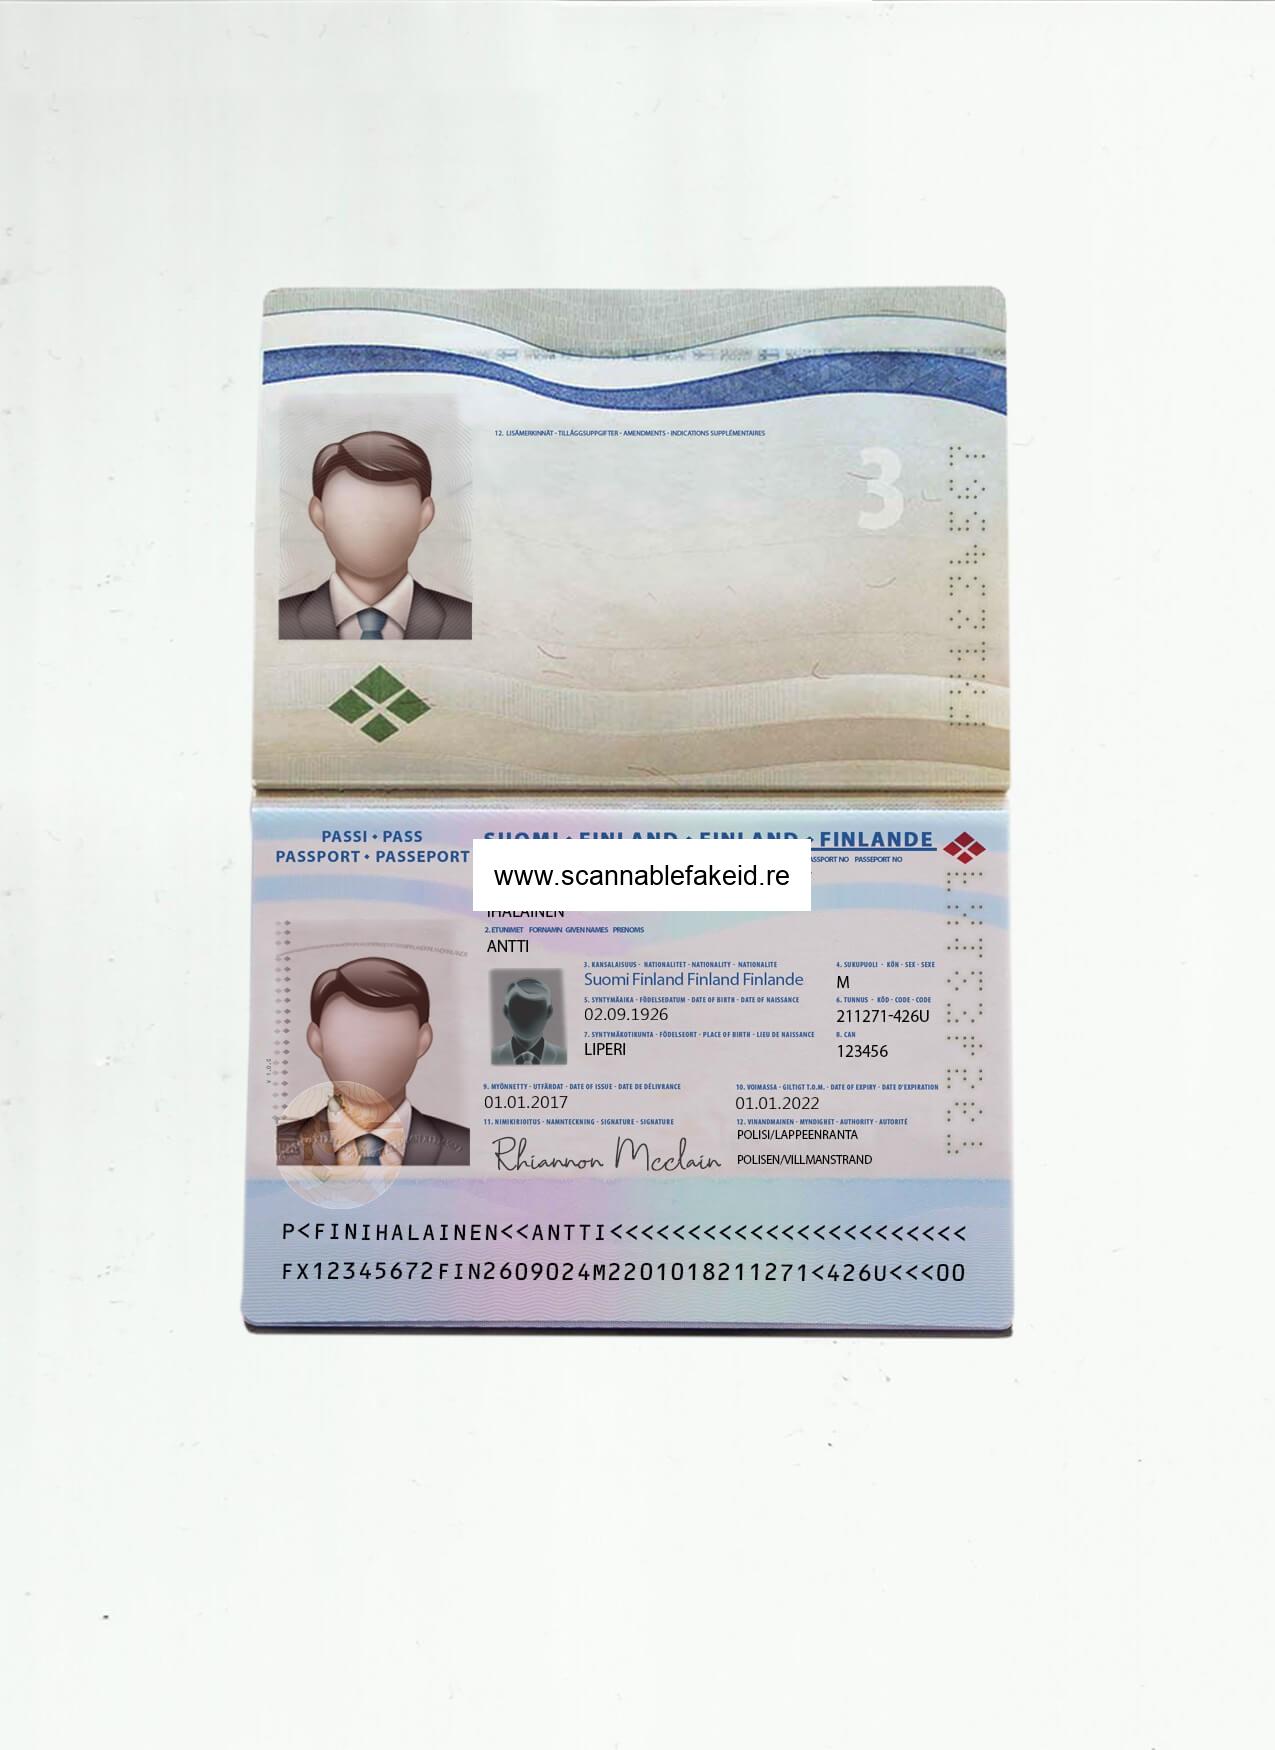 Finland Fake Passport - Buy Scannable Fake ID Online - Fake Drivers License